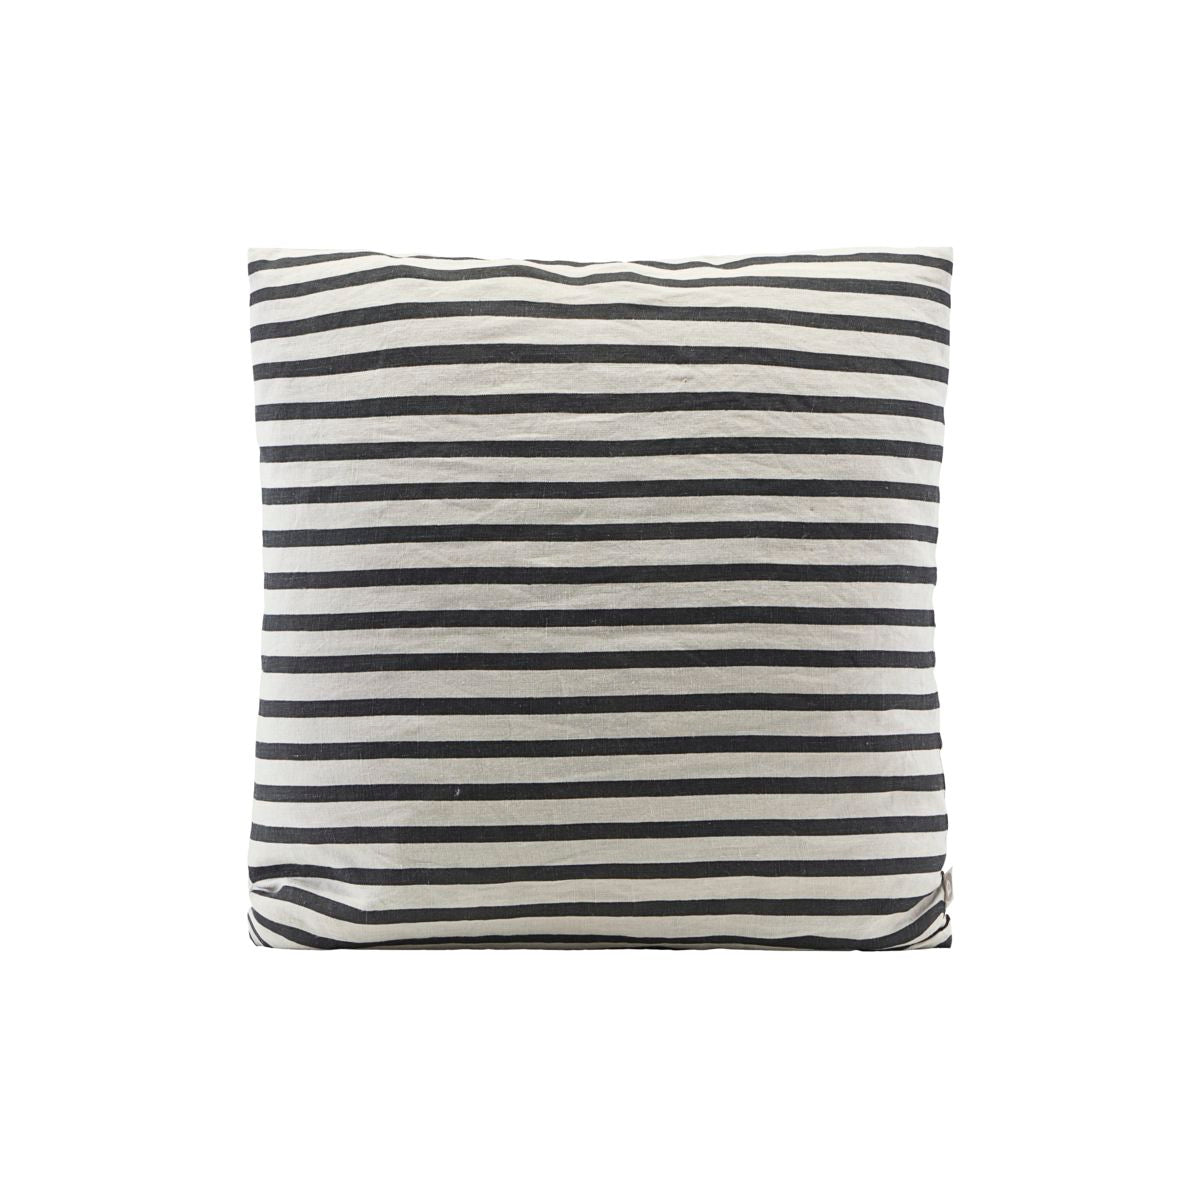 Linen Cushion Cover - Black and Grey Stripe 60x60cm